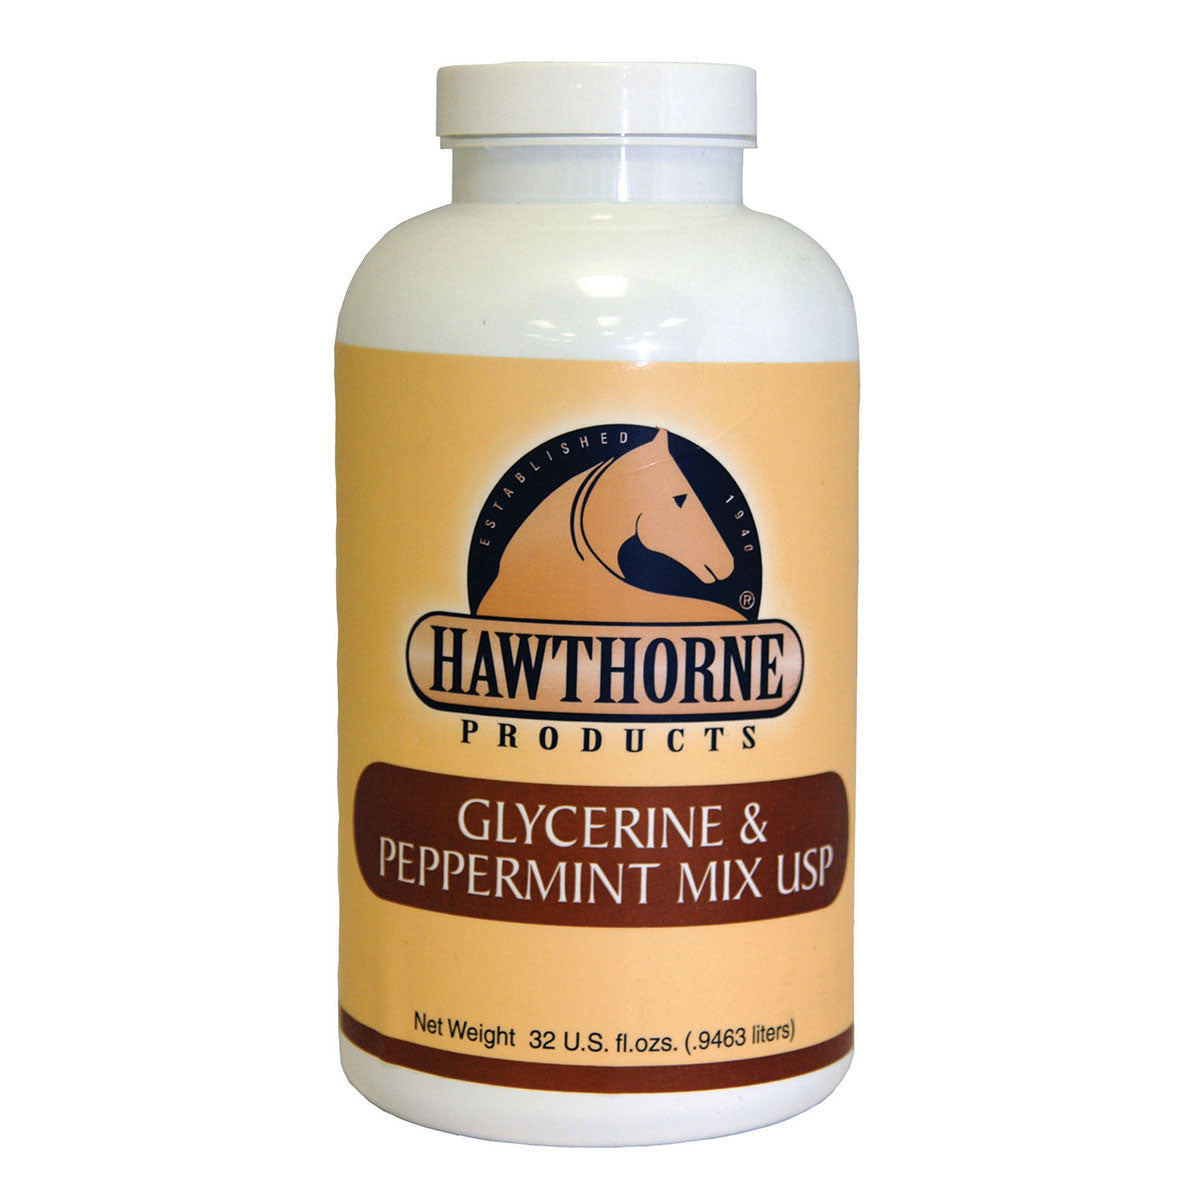 Glycerine & Peppermint Mix USP for Horses